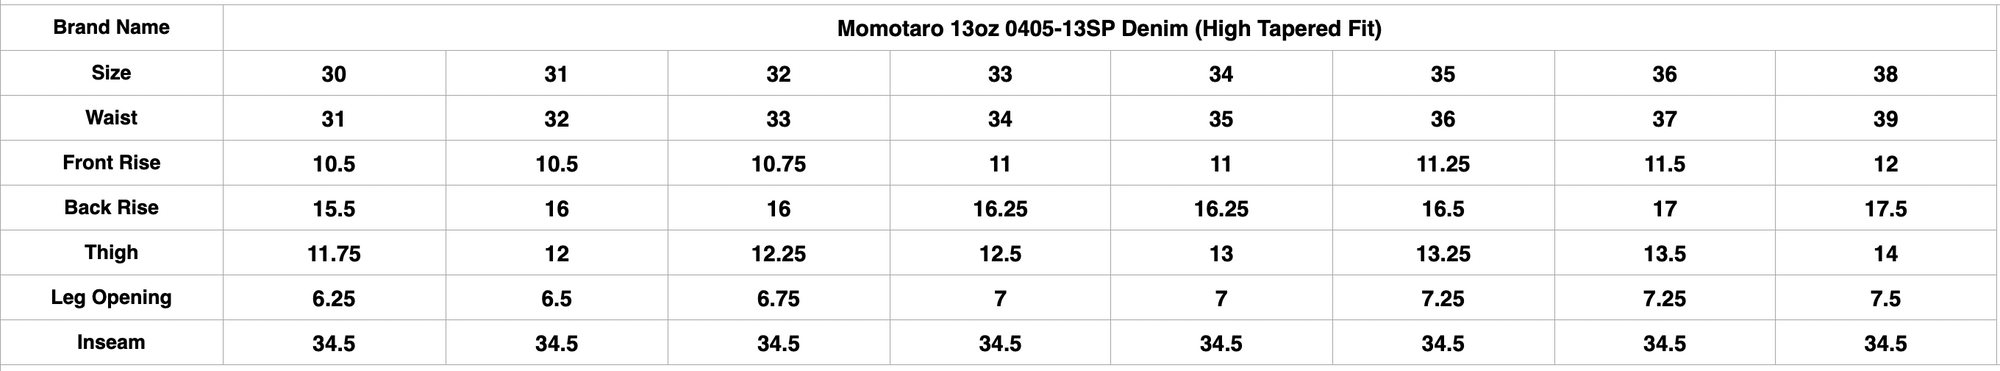 Momotaro 13oz 0405-13SP Denim (High Tapered Fit)